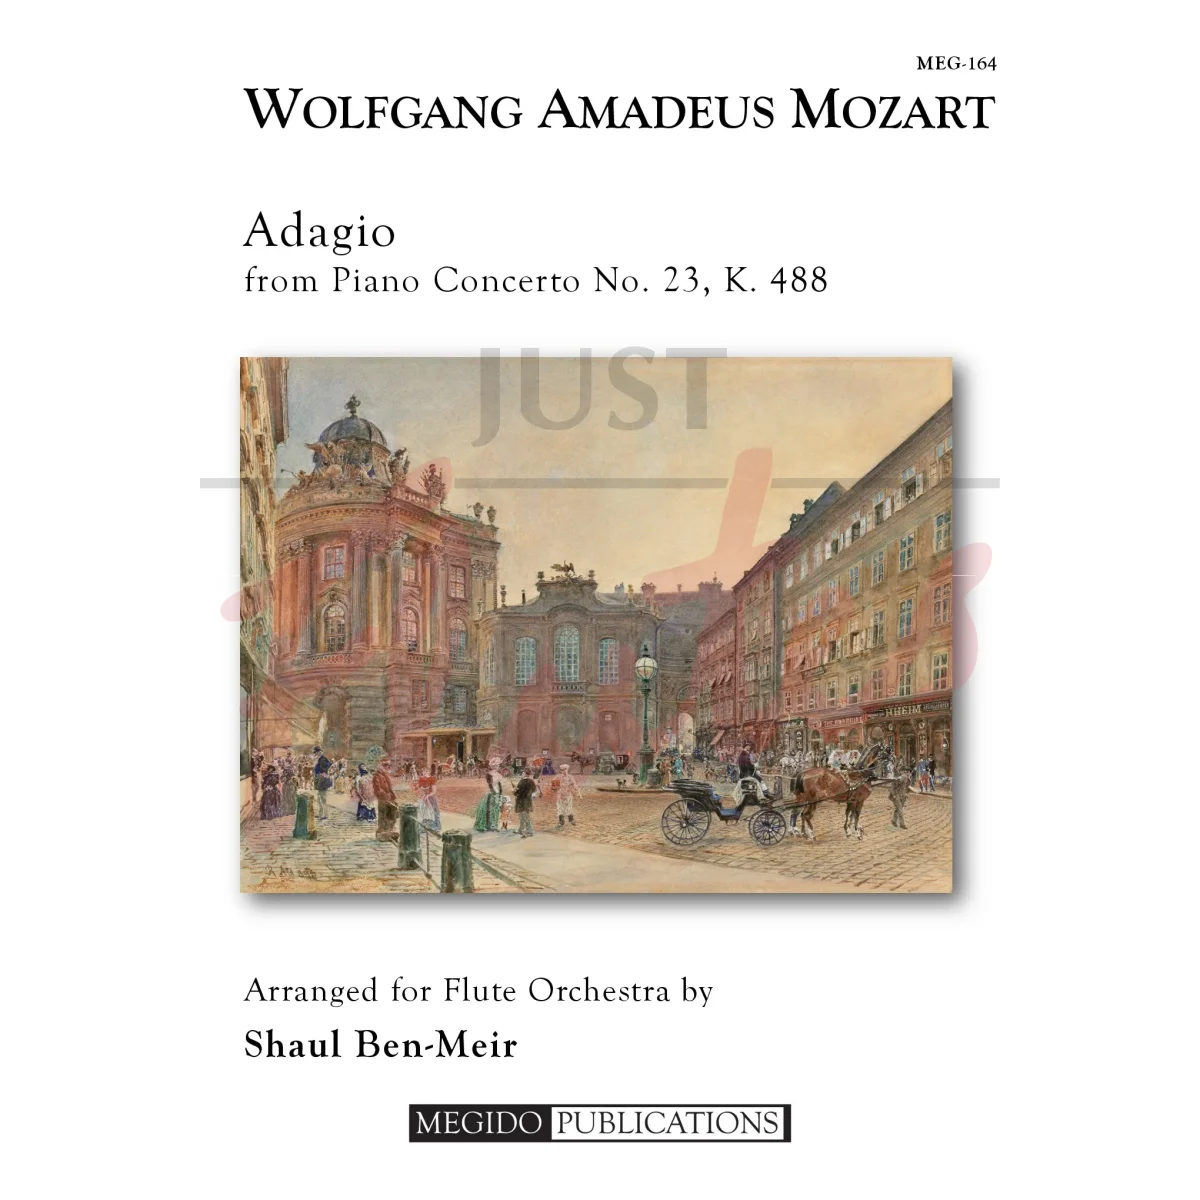 Adagio from Piano Concerto No. 23 K. 488 for Flute Choir